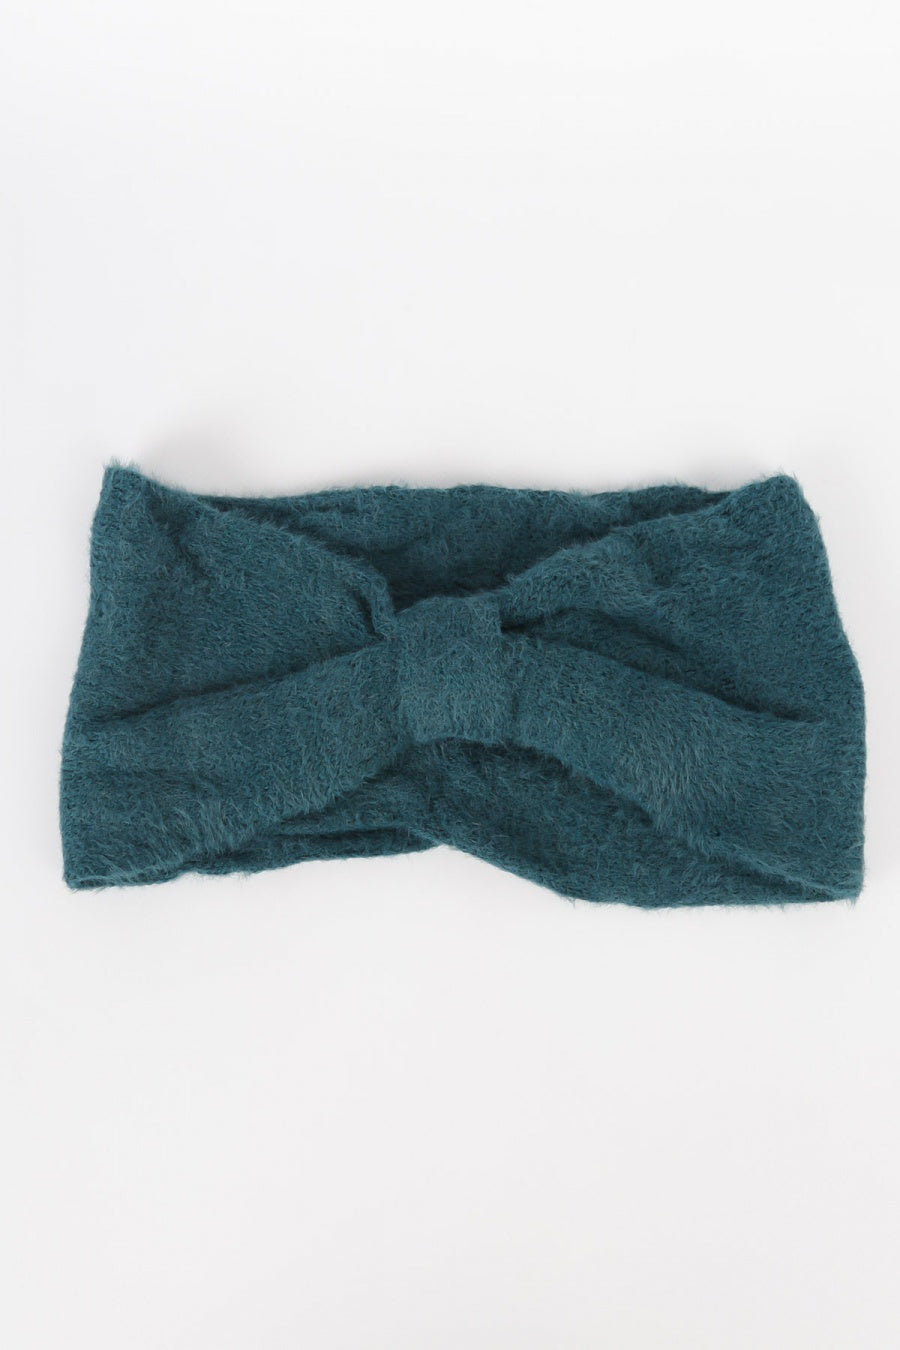 Maya petrol blue knit headband